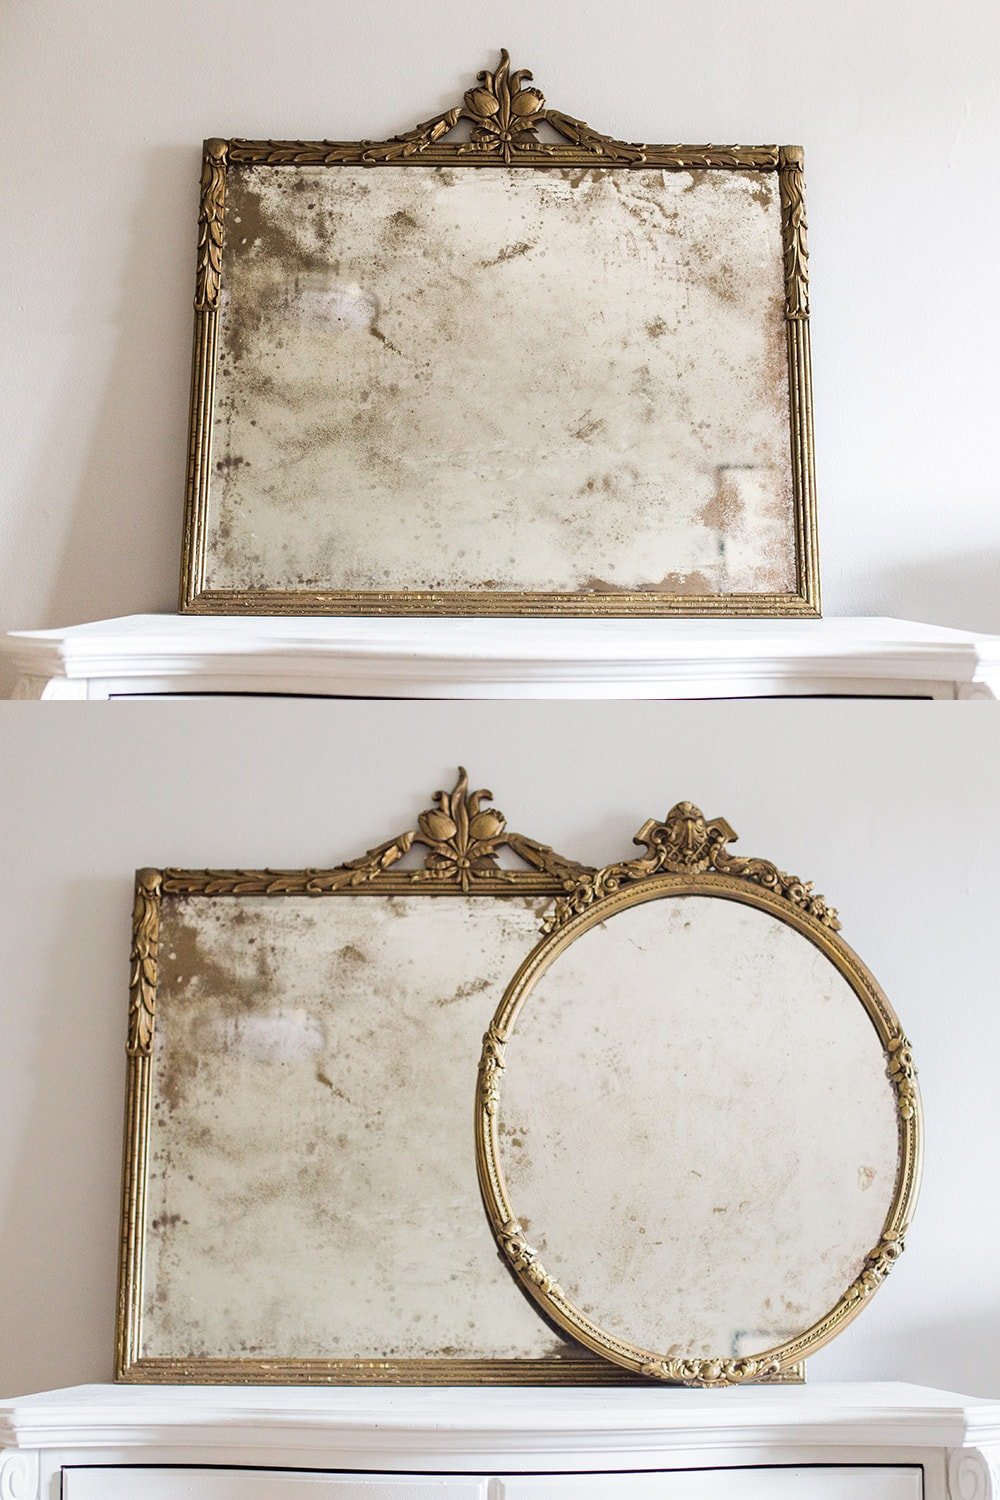 How To Antique A Mirror Tutorial, How Do You Antique A Mirror With Vinegar